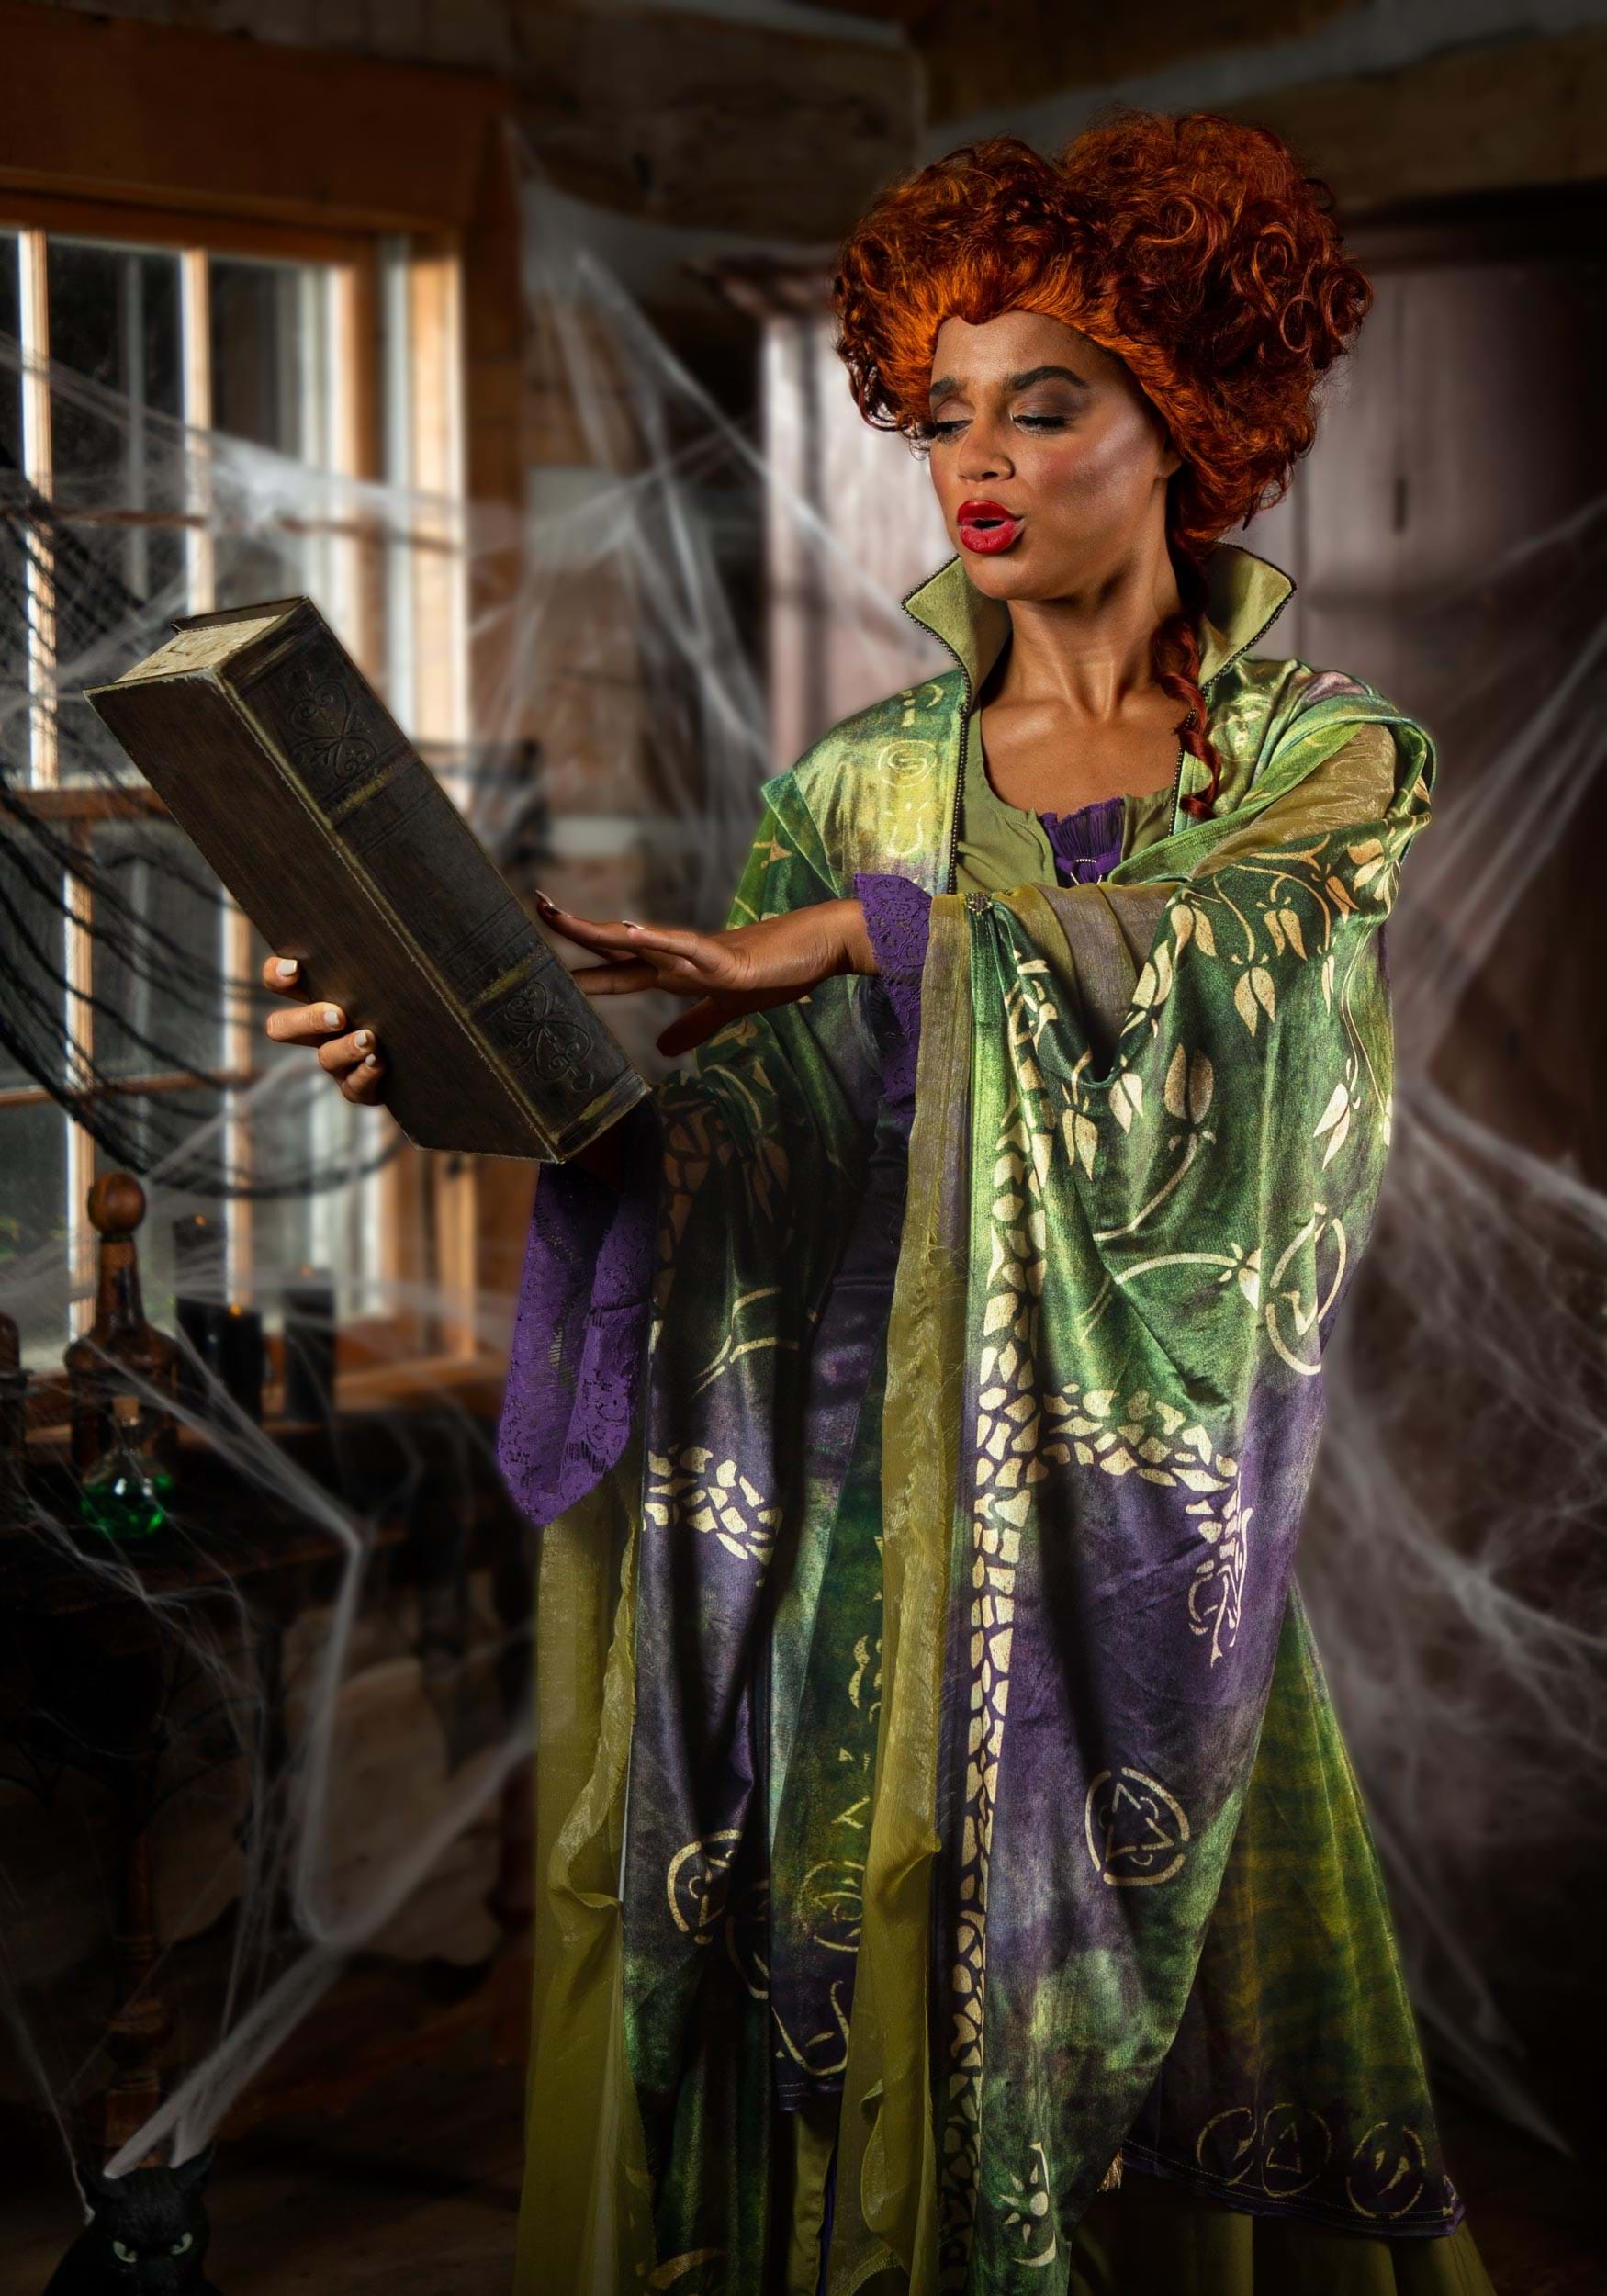 Authentic Hocus Pocus Winifred Sanderson Costume for Women